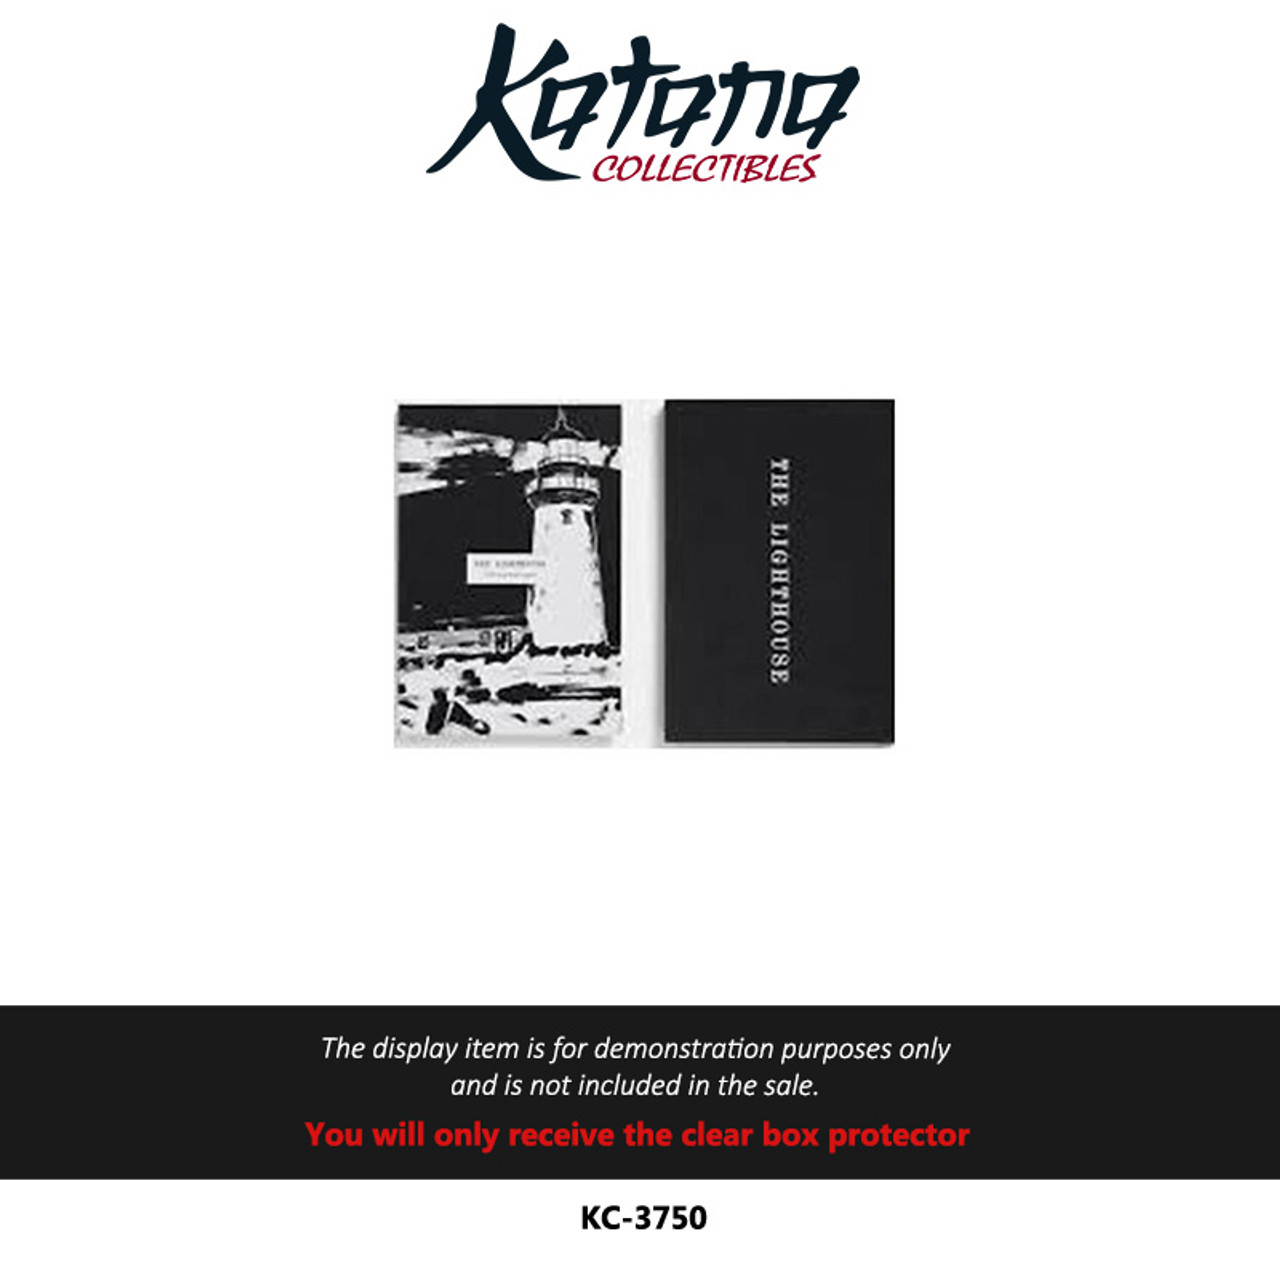 Katana Collectibles Protector For Lighthouse A24 collectors edition